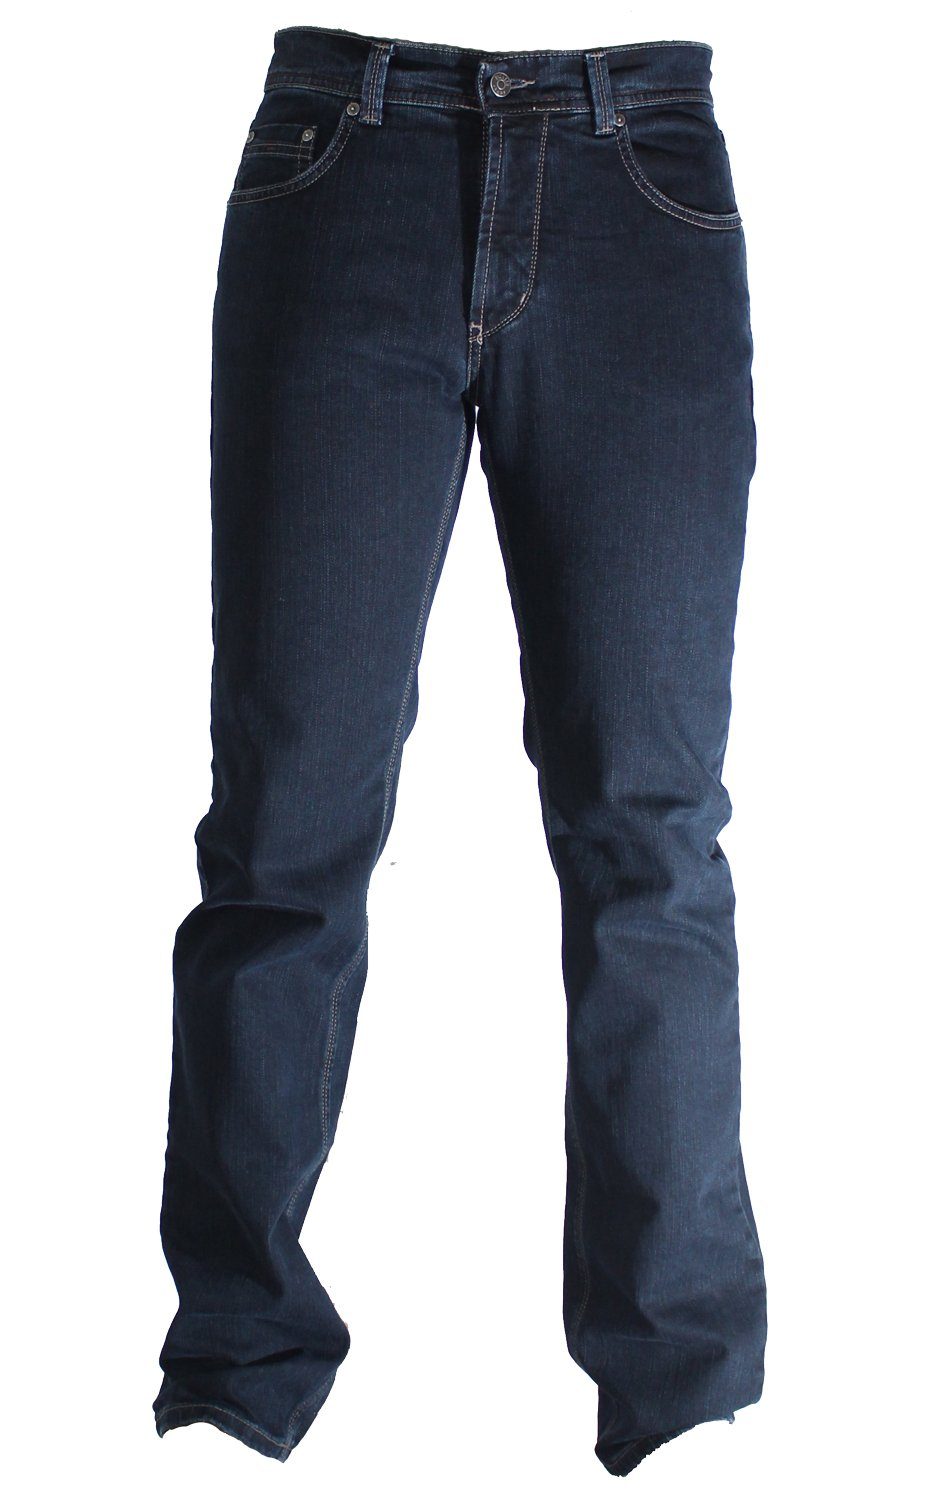 PIONEER 1680 Authentic black Pioneer Jeans 9738.02 rinse blue 5-Pocket-Jeans RANDO